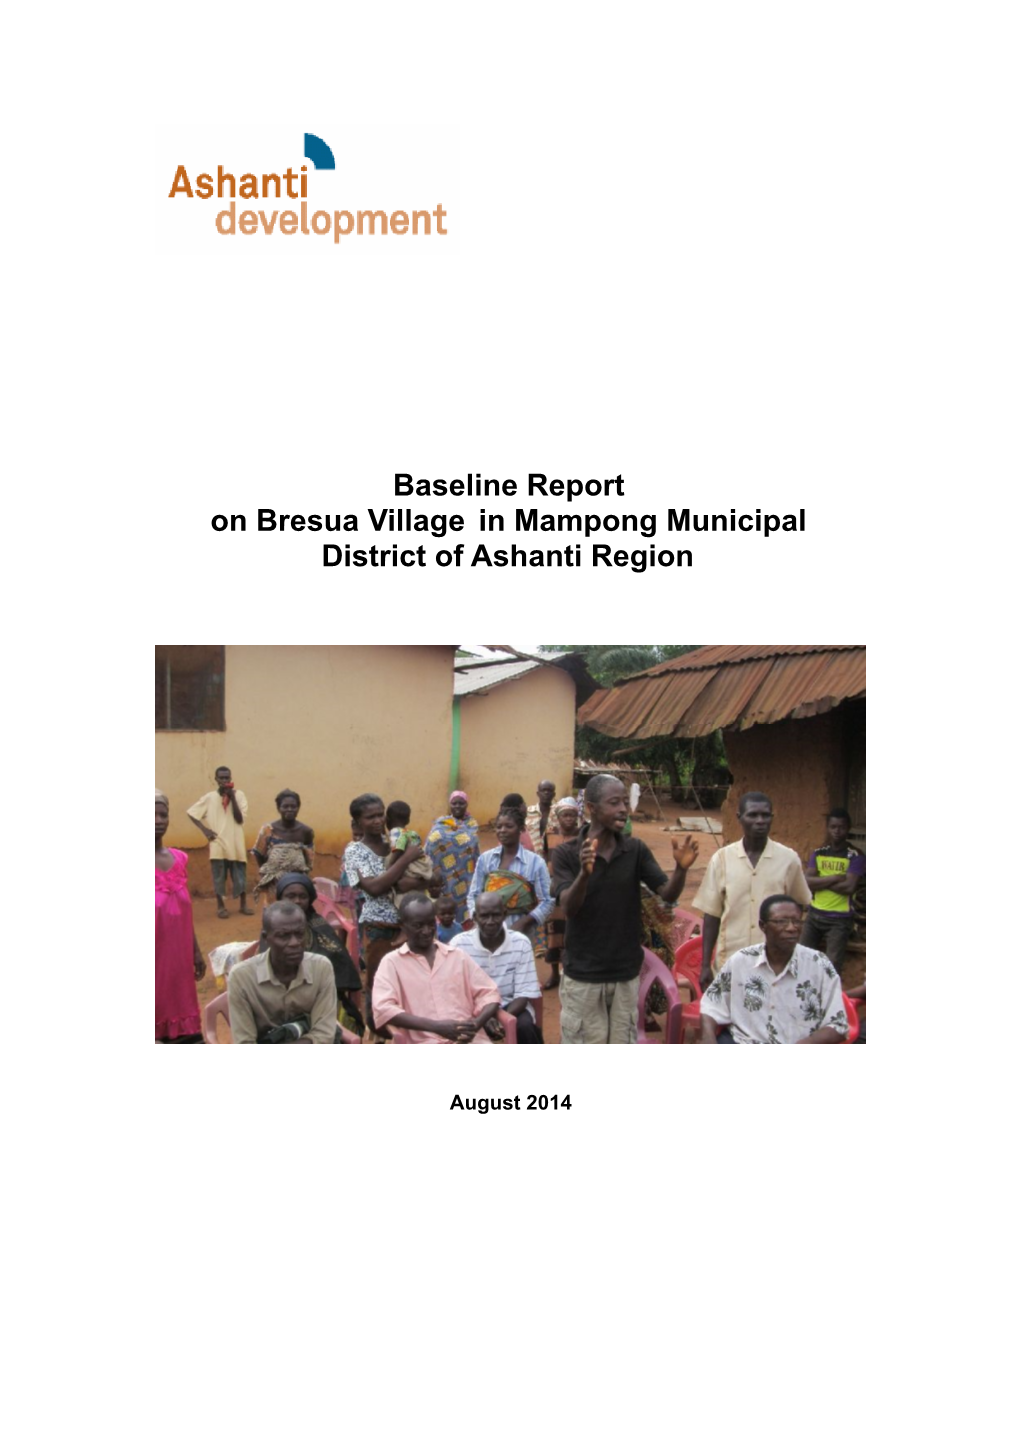 Baseline Report on Bresua Village in Mampong Municipal District of Ashanti Region